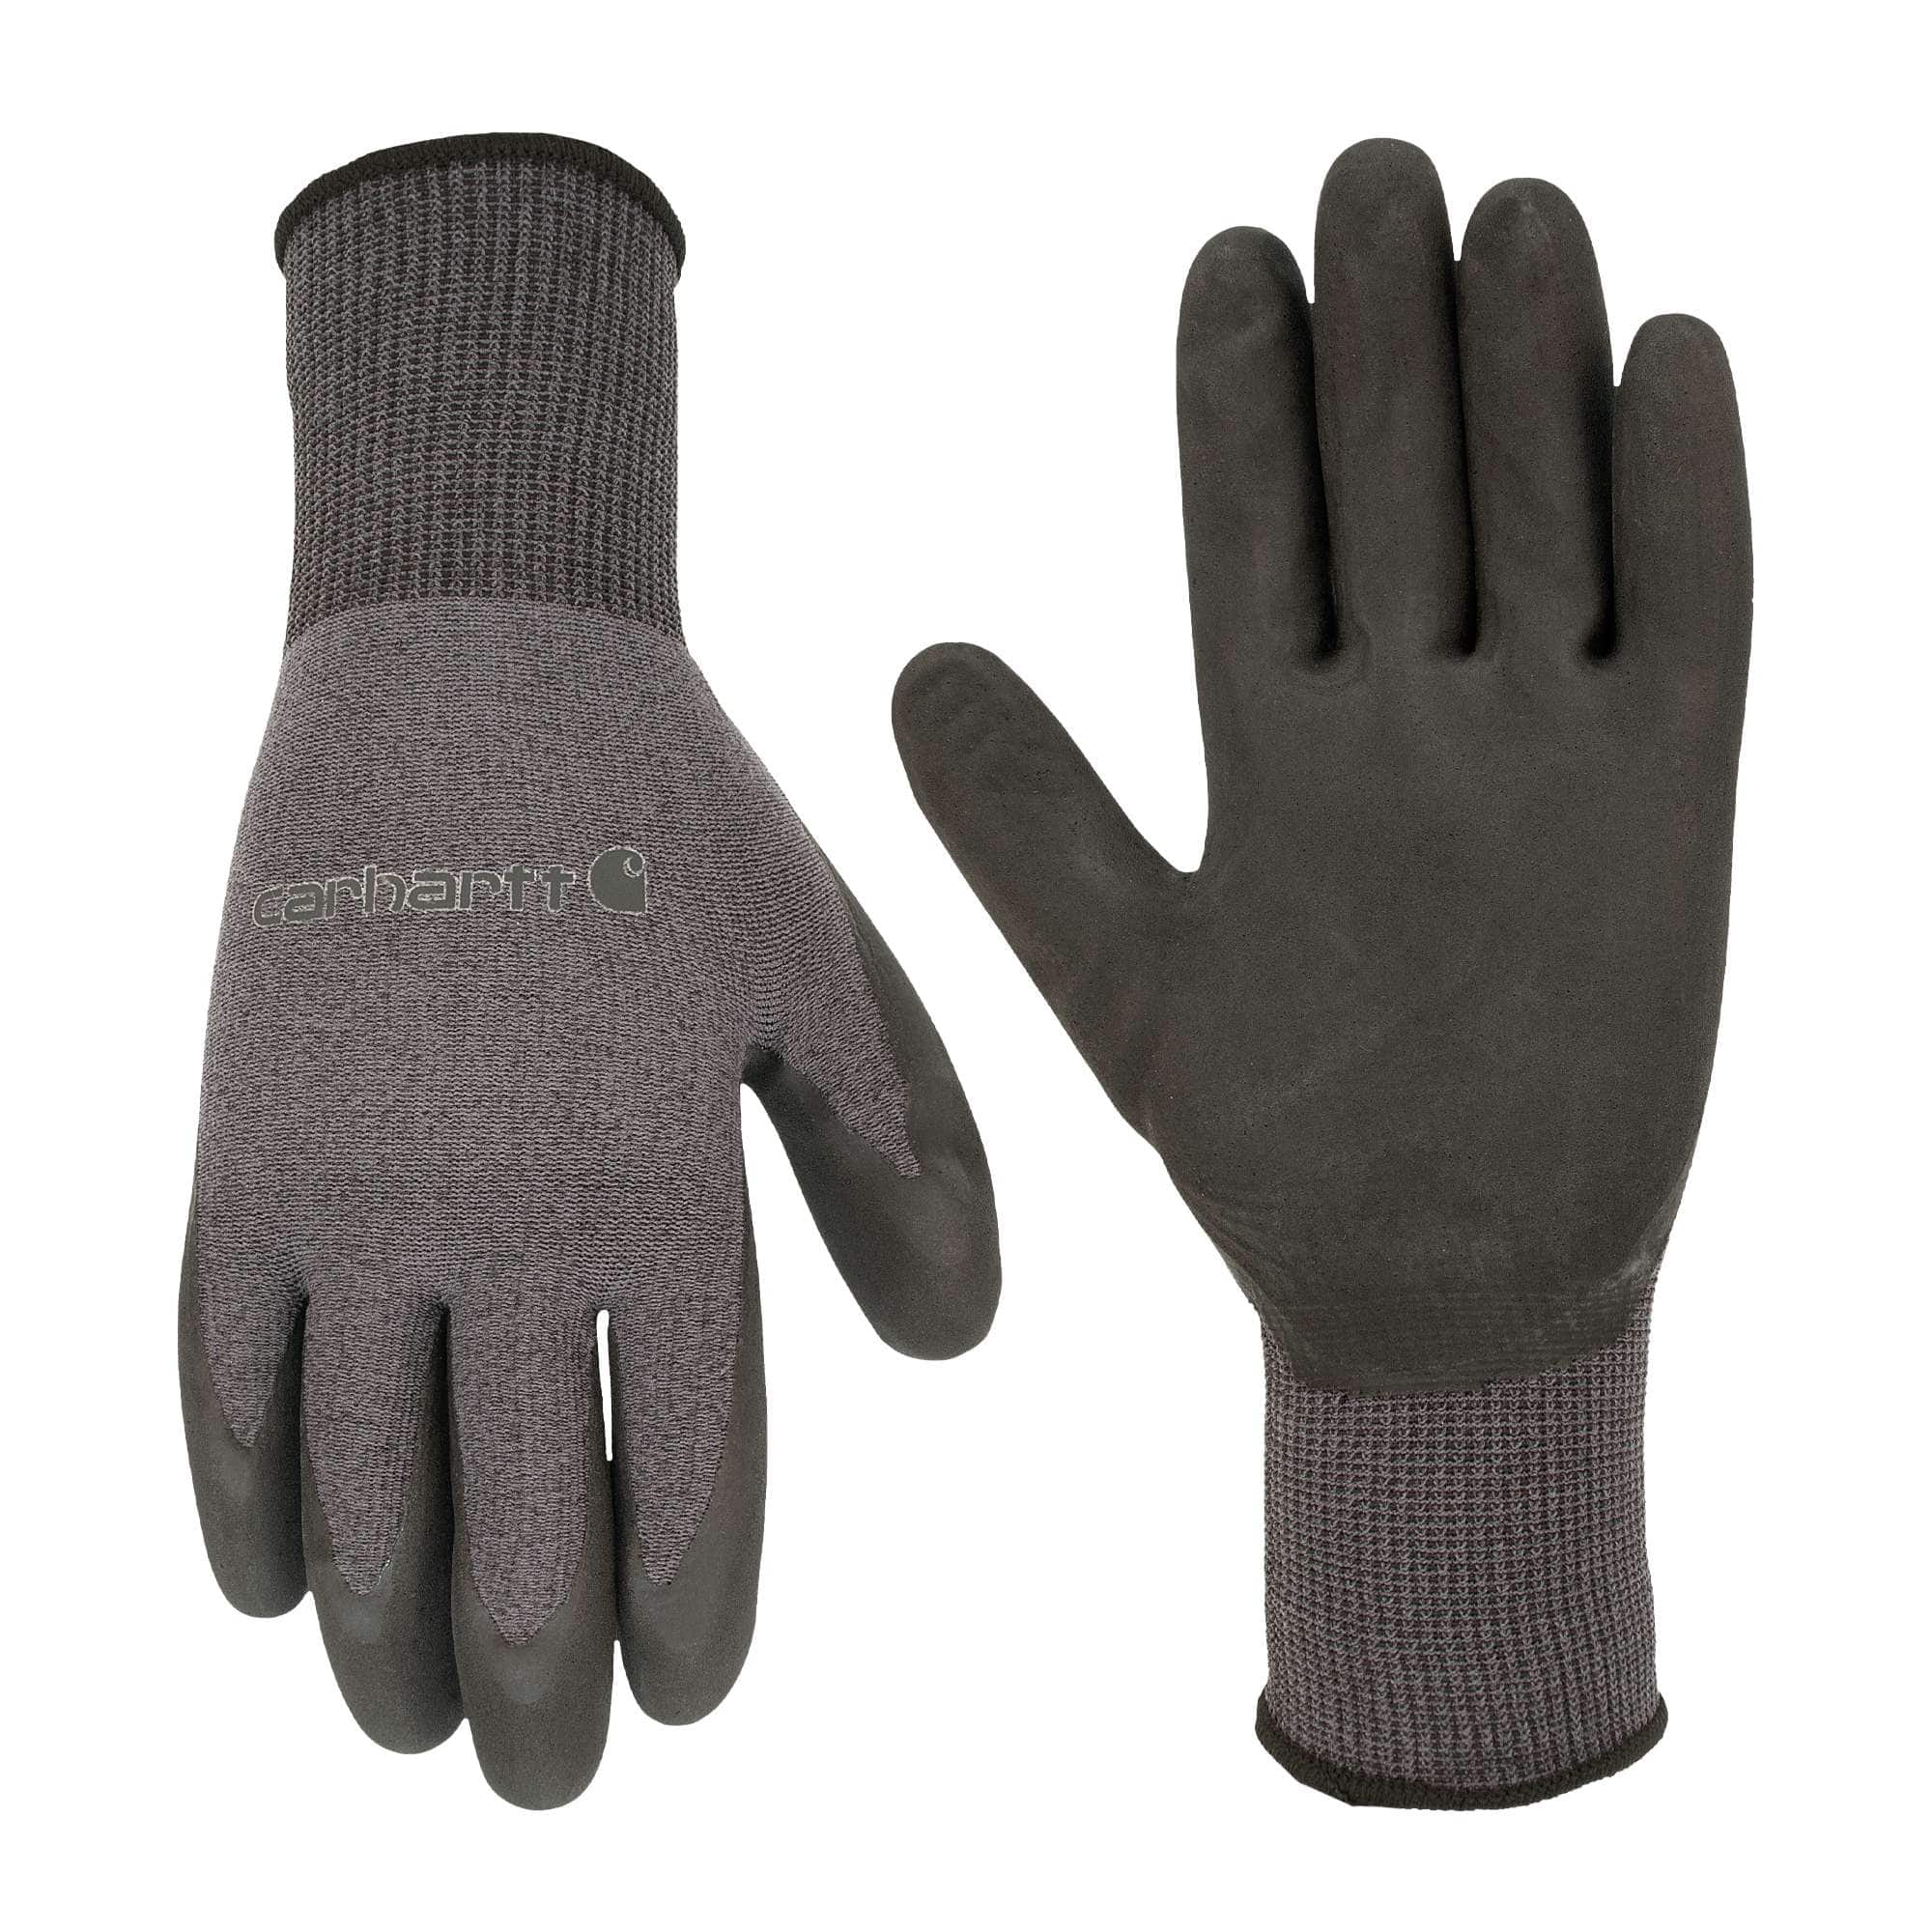 Carhartt Women's Quilted Waterproof Gloves GL0575W - Uniform Pros